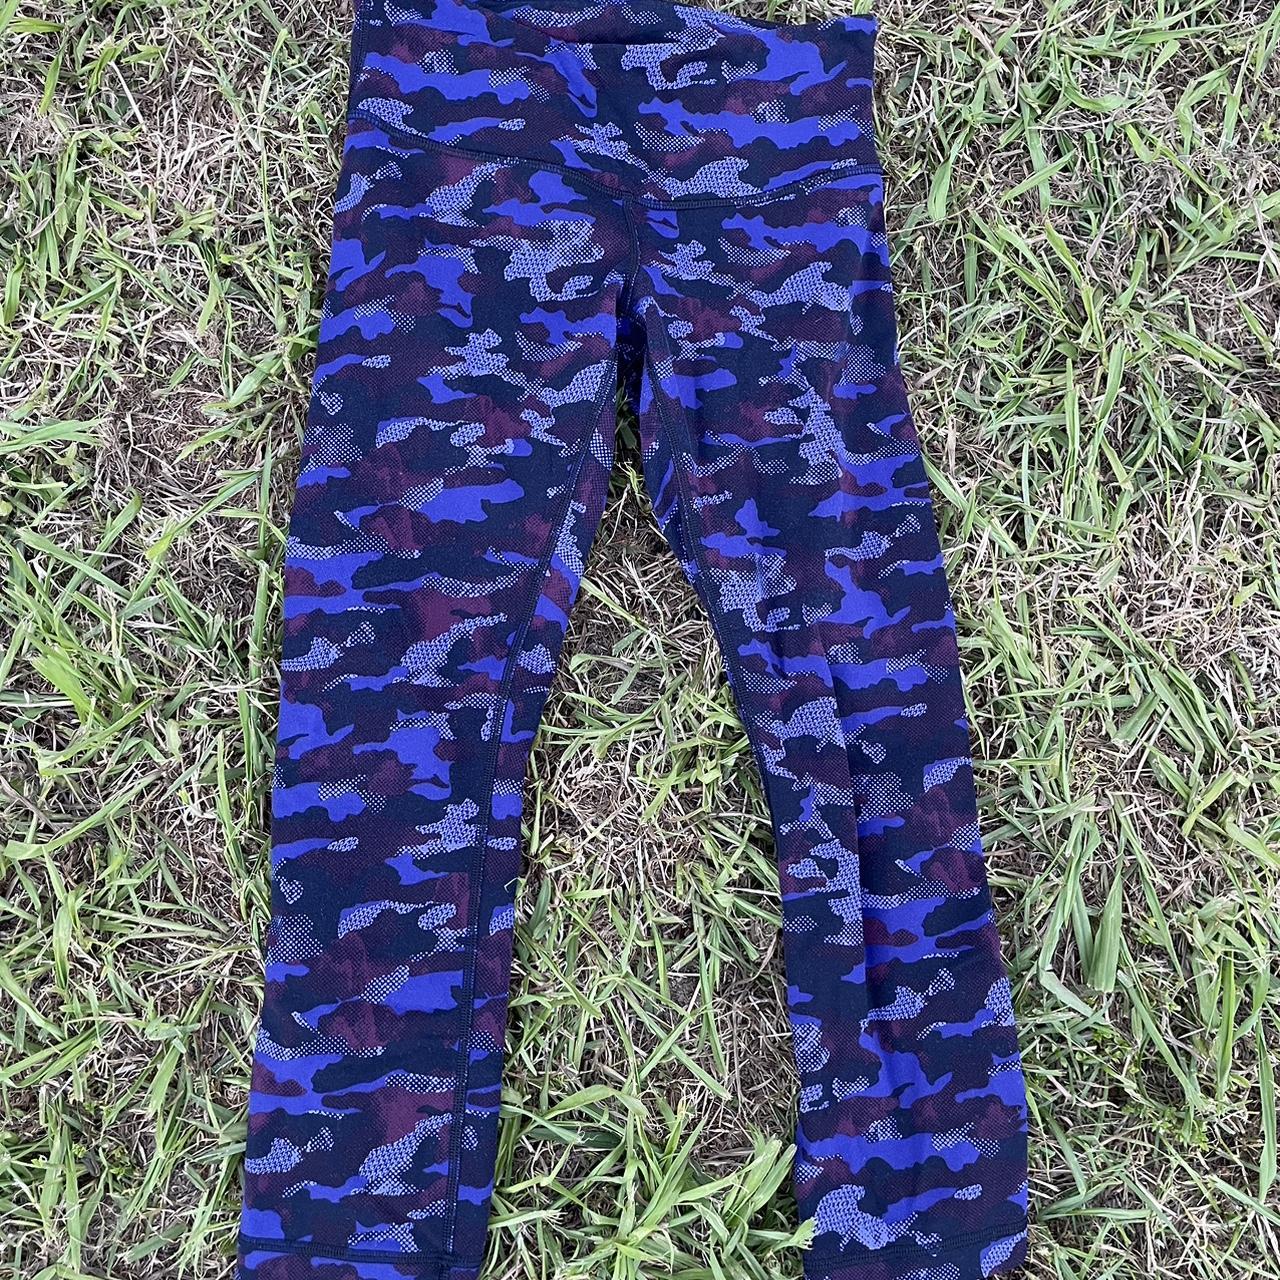 purple camo lululemon leggings 💜 - stretchy & - Depop